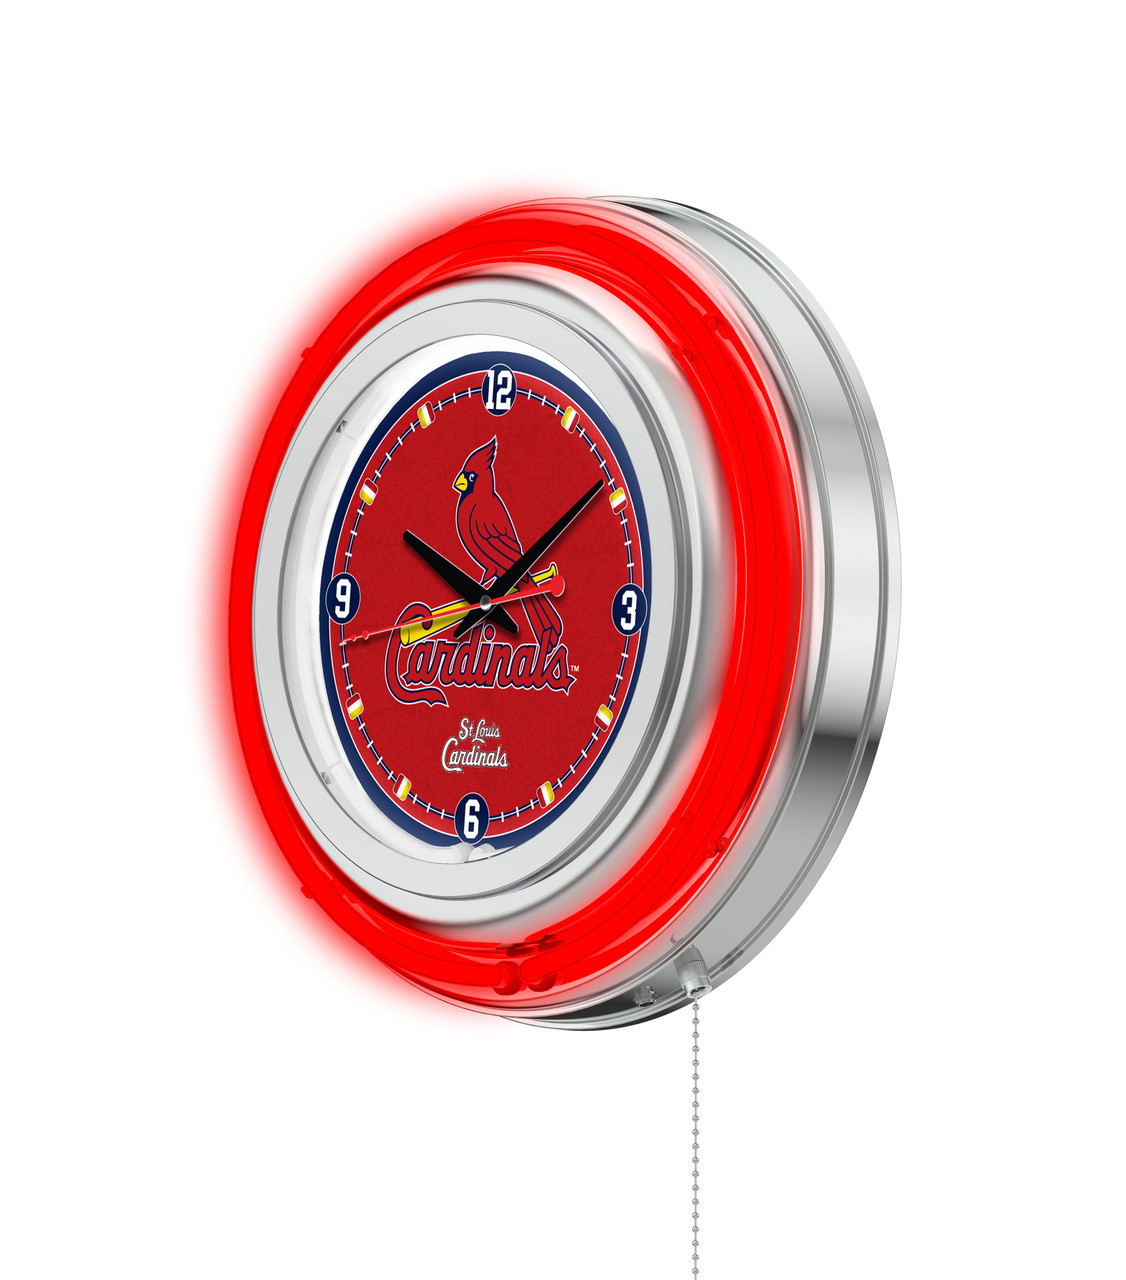 St. Louis Cardinals 15 Double Neon Wall Clock